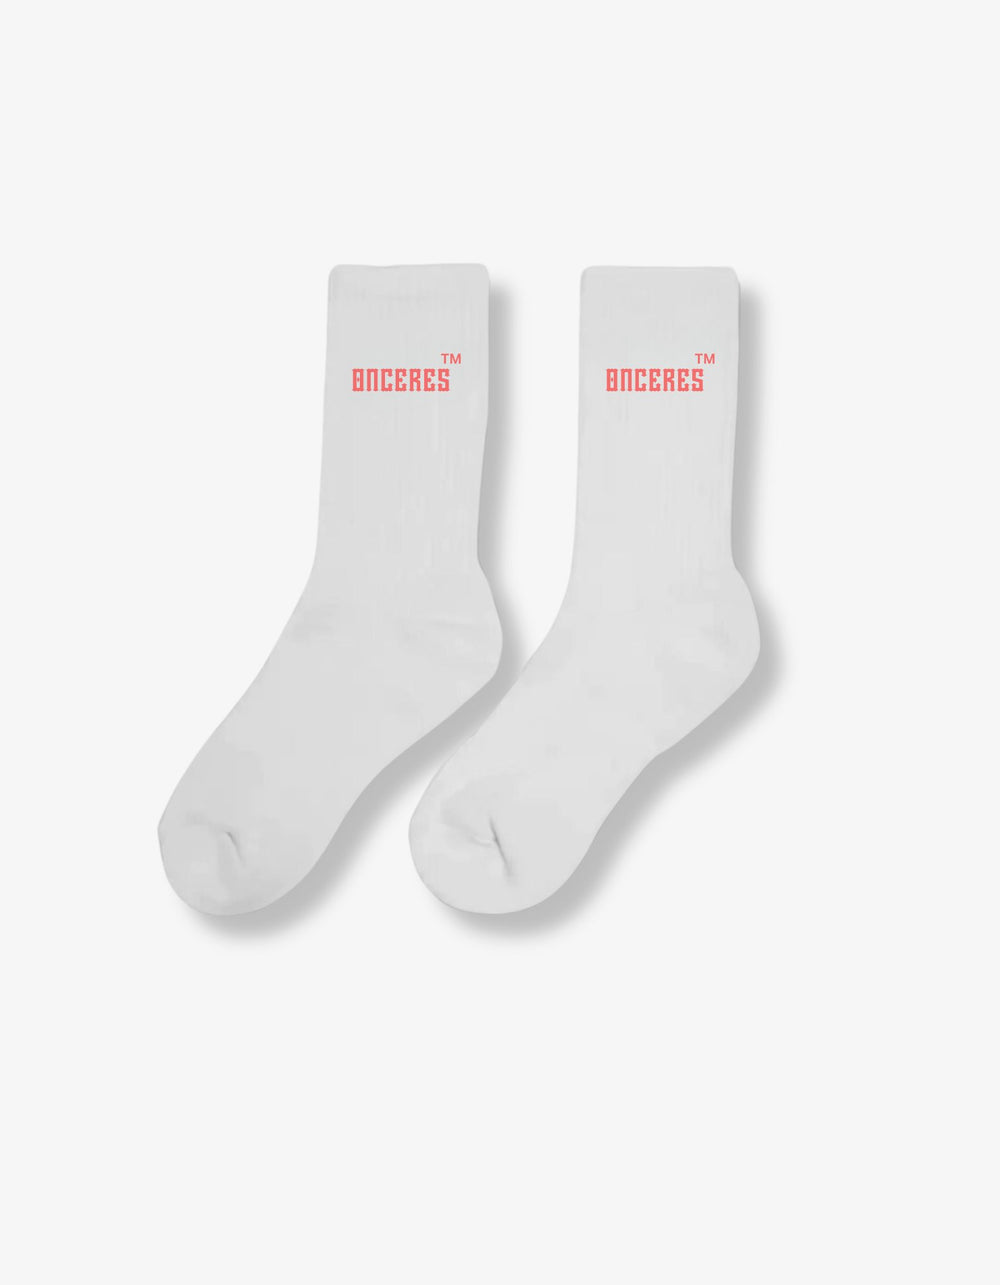 Red Logo - Crew Socks - Onceres™